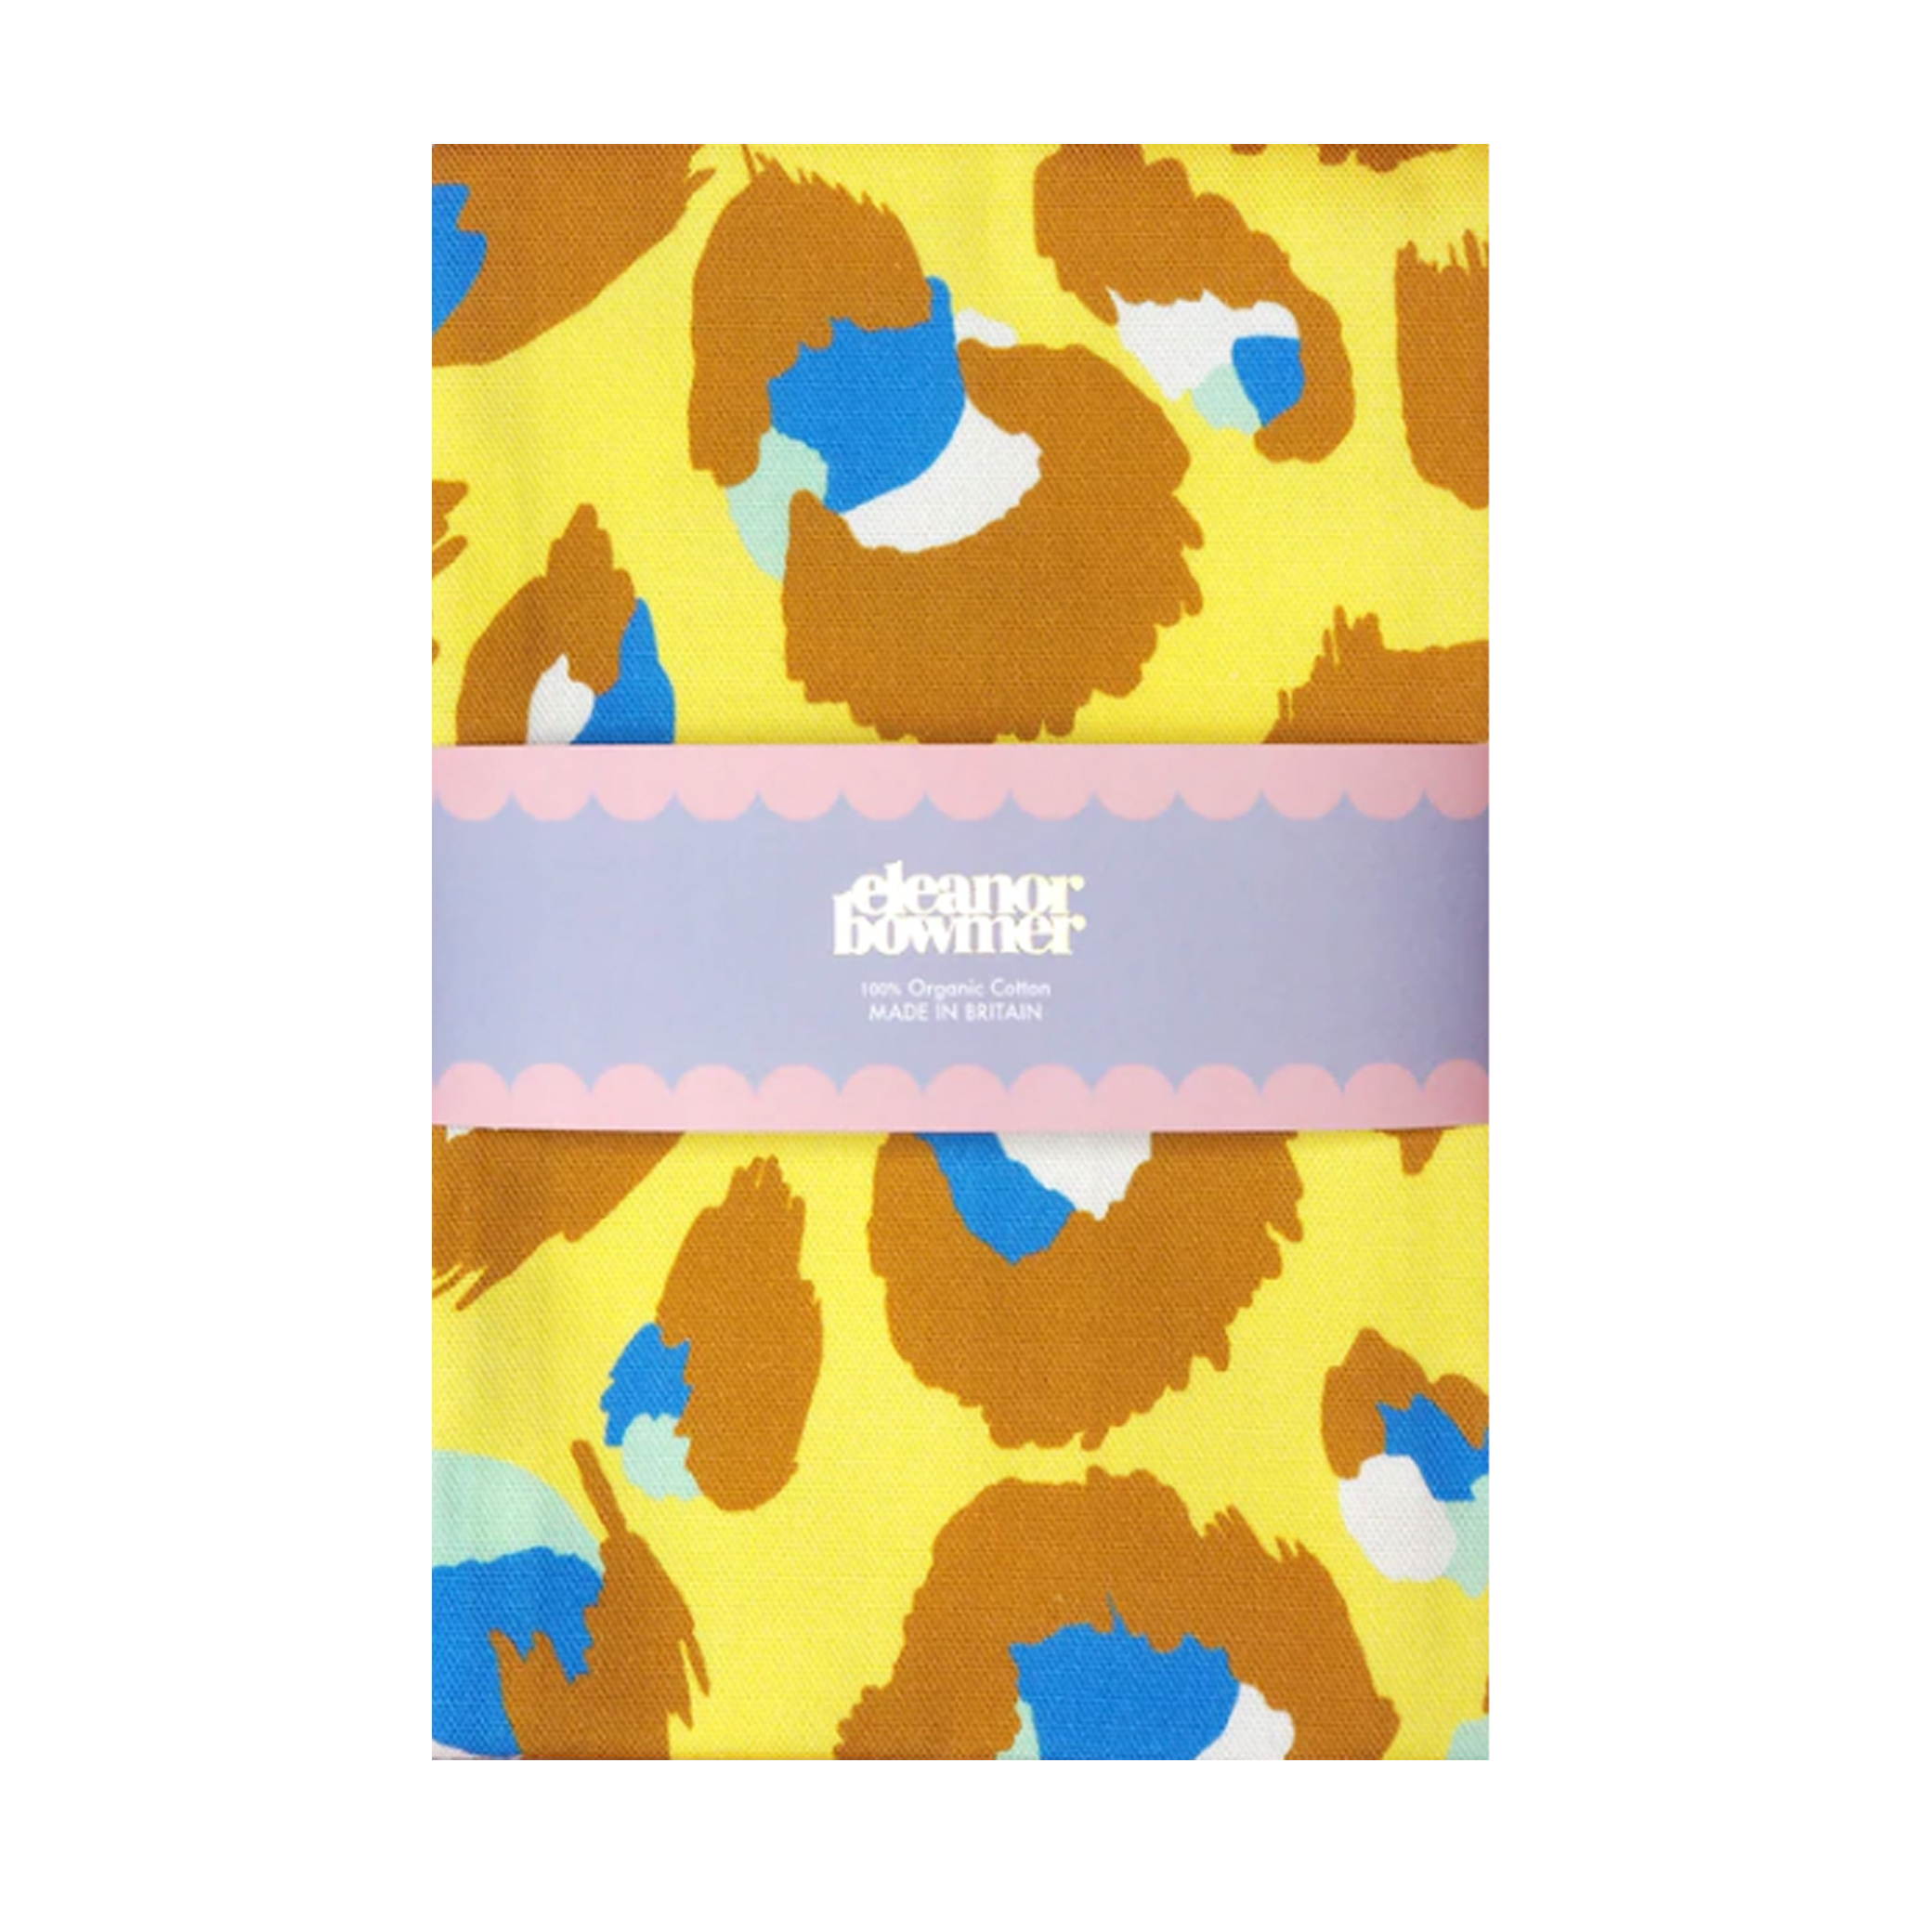 eleanor-bowmer-yellow-leopard-tea-towel